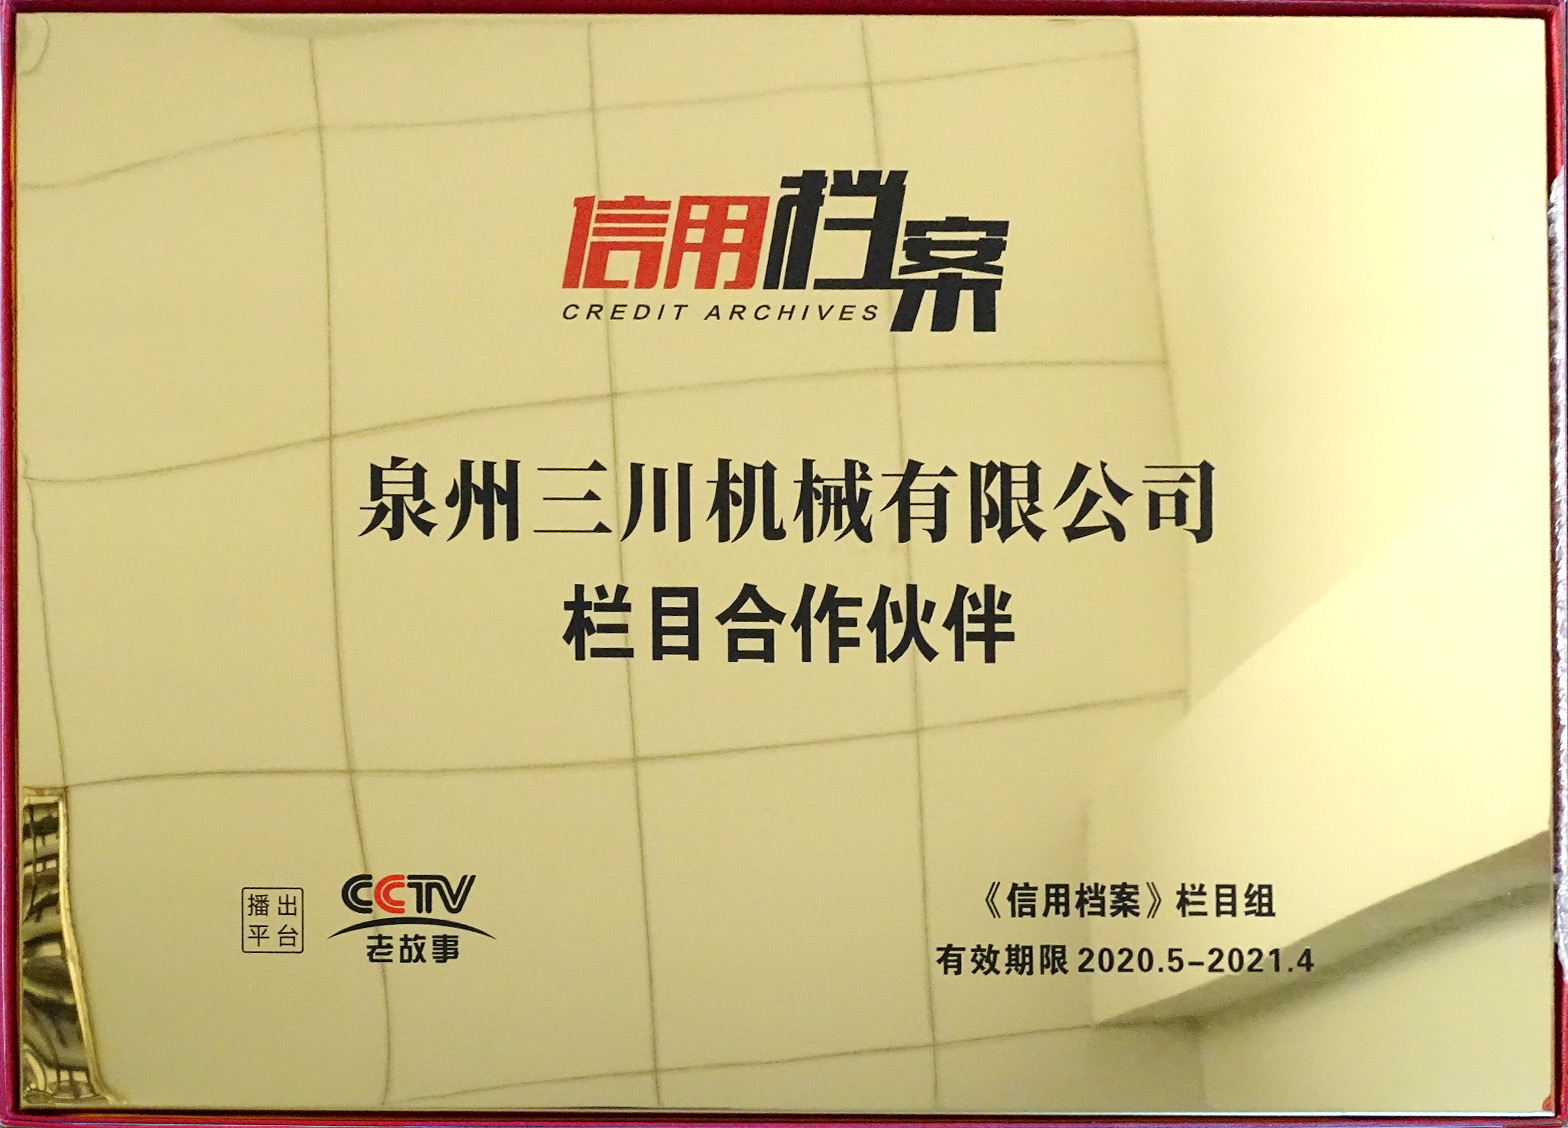 CCTV cooperation program